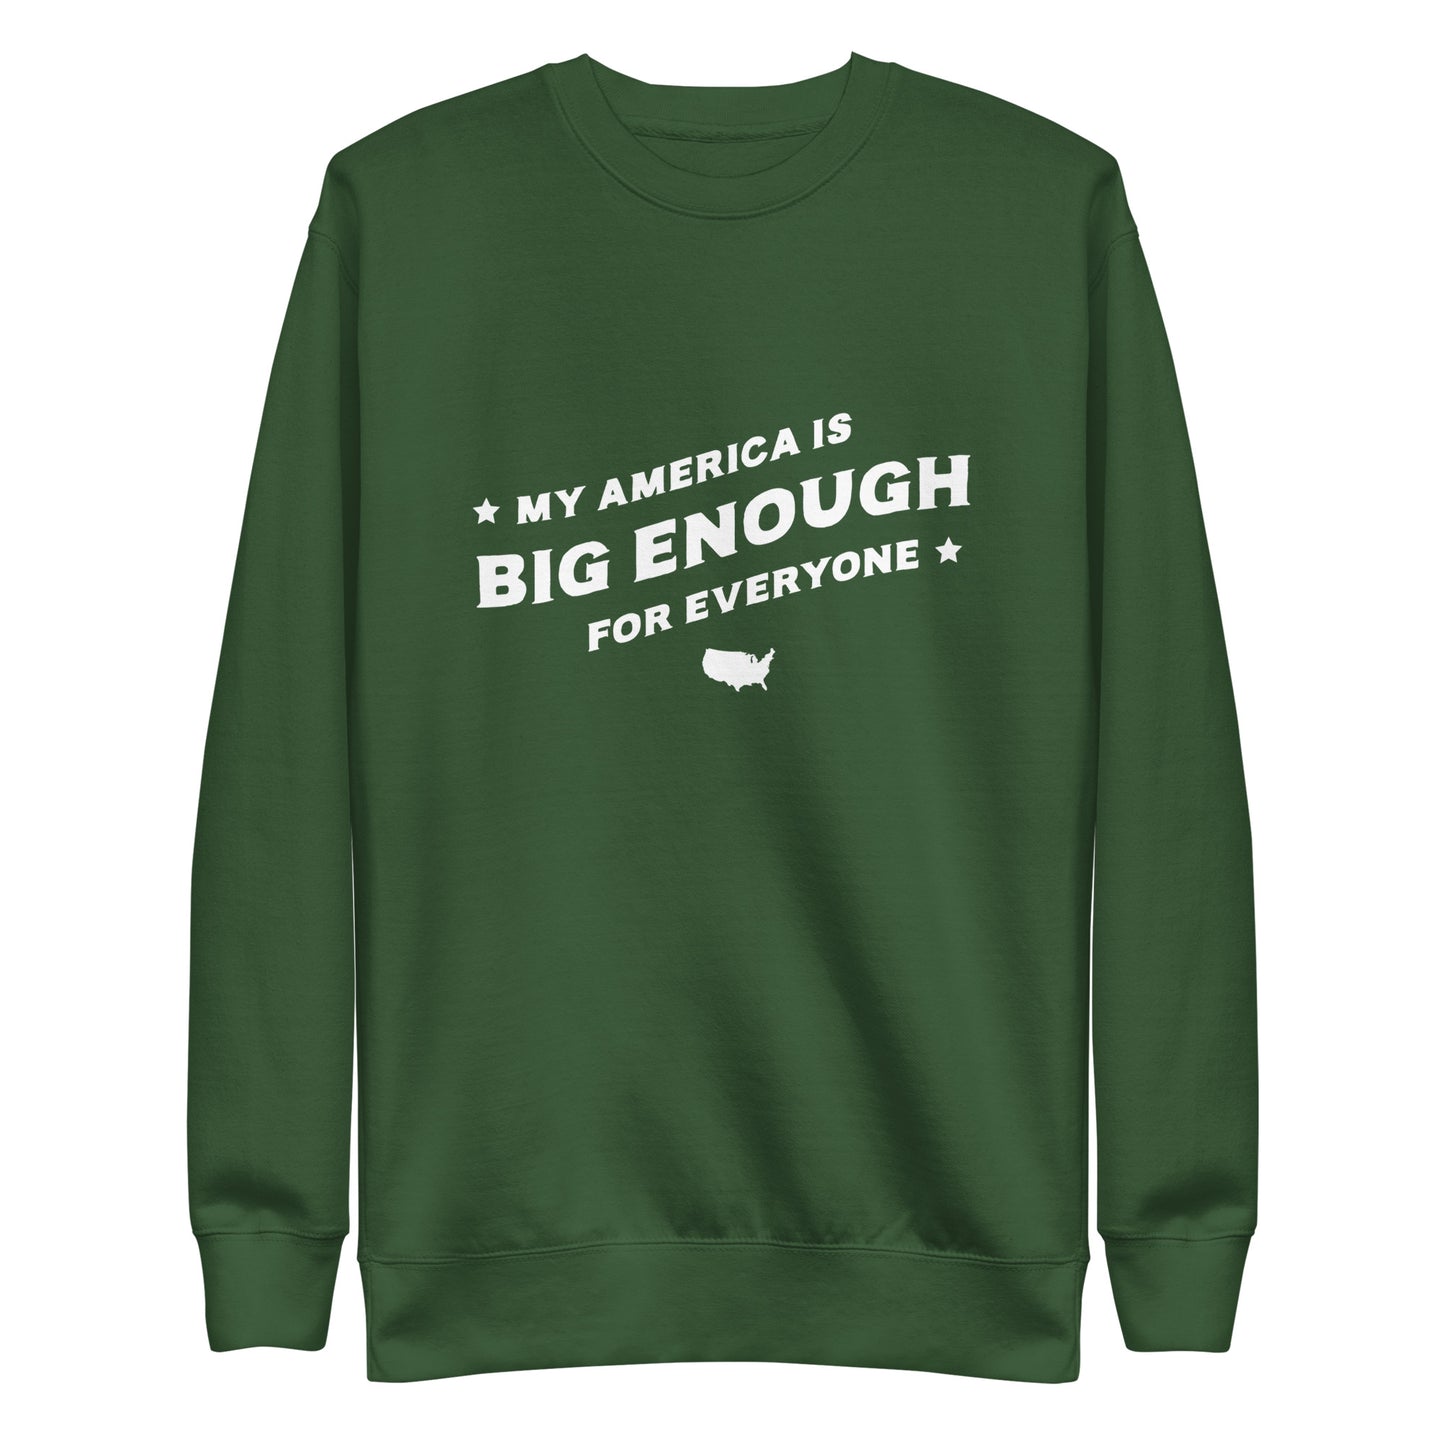 My America is Big Enough for Everyone - Sweatshirt